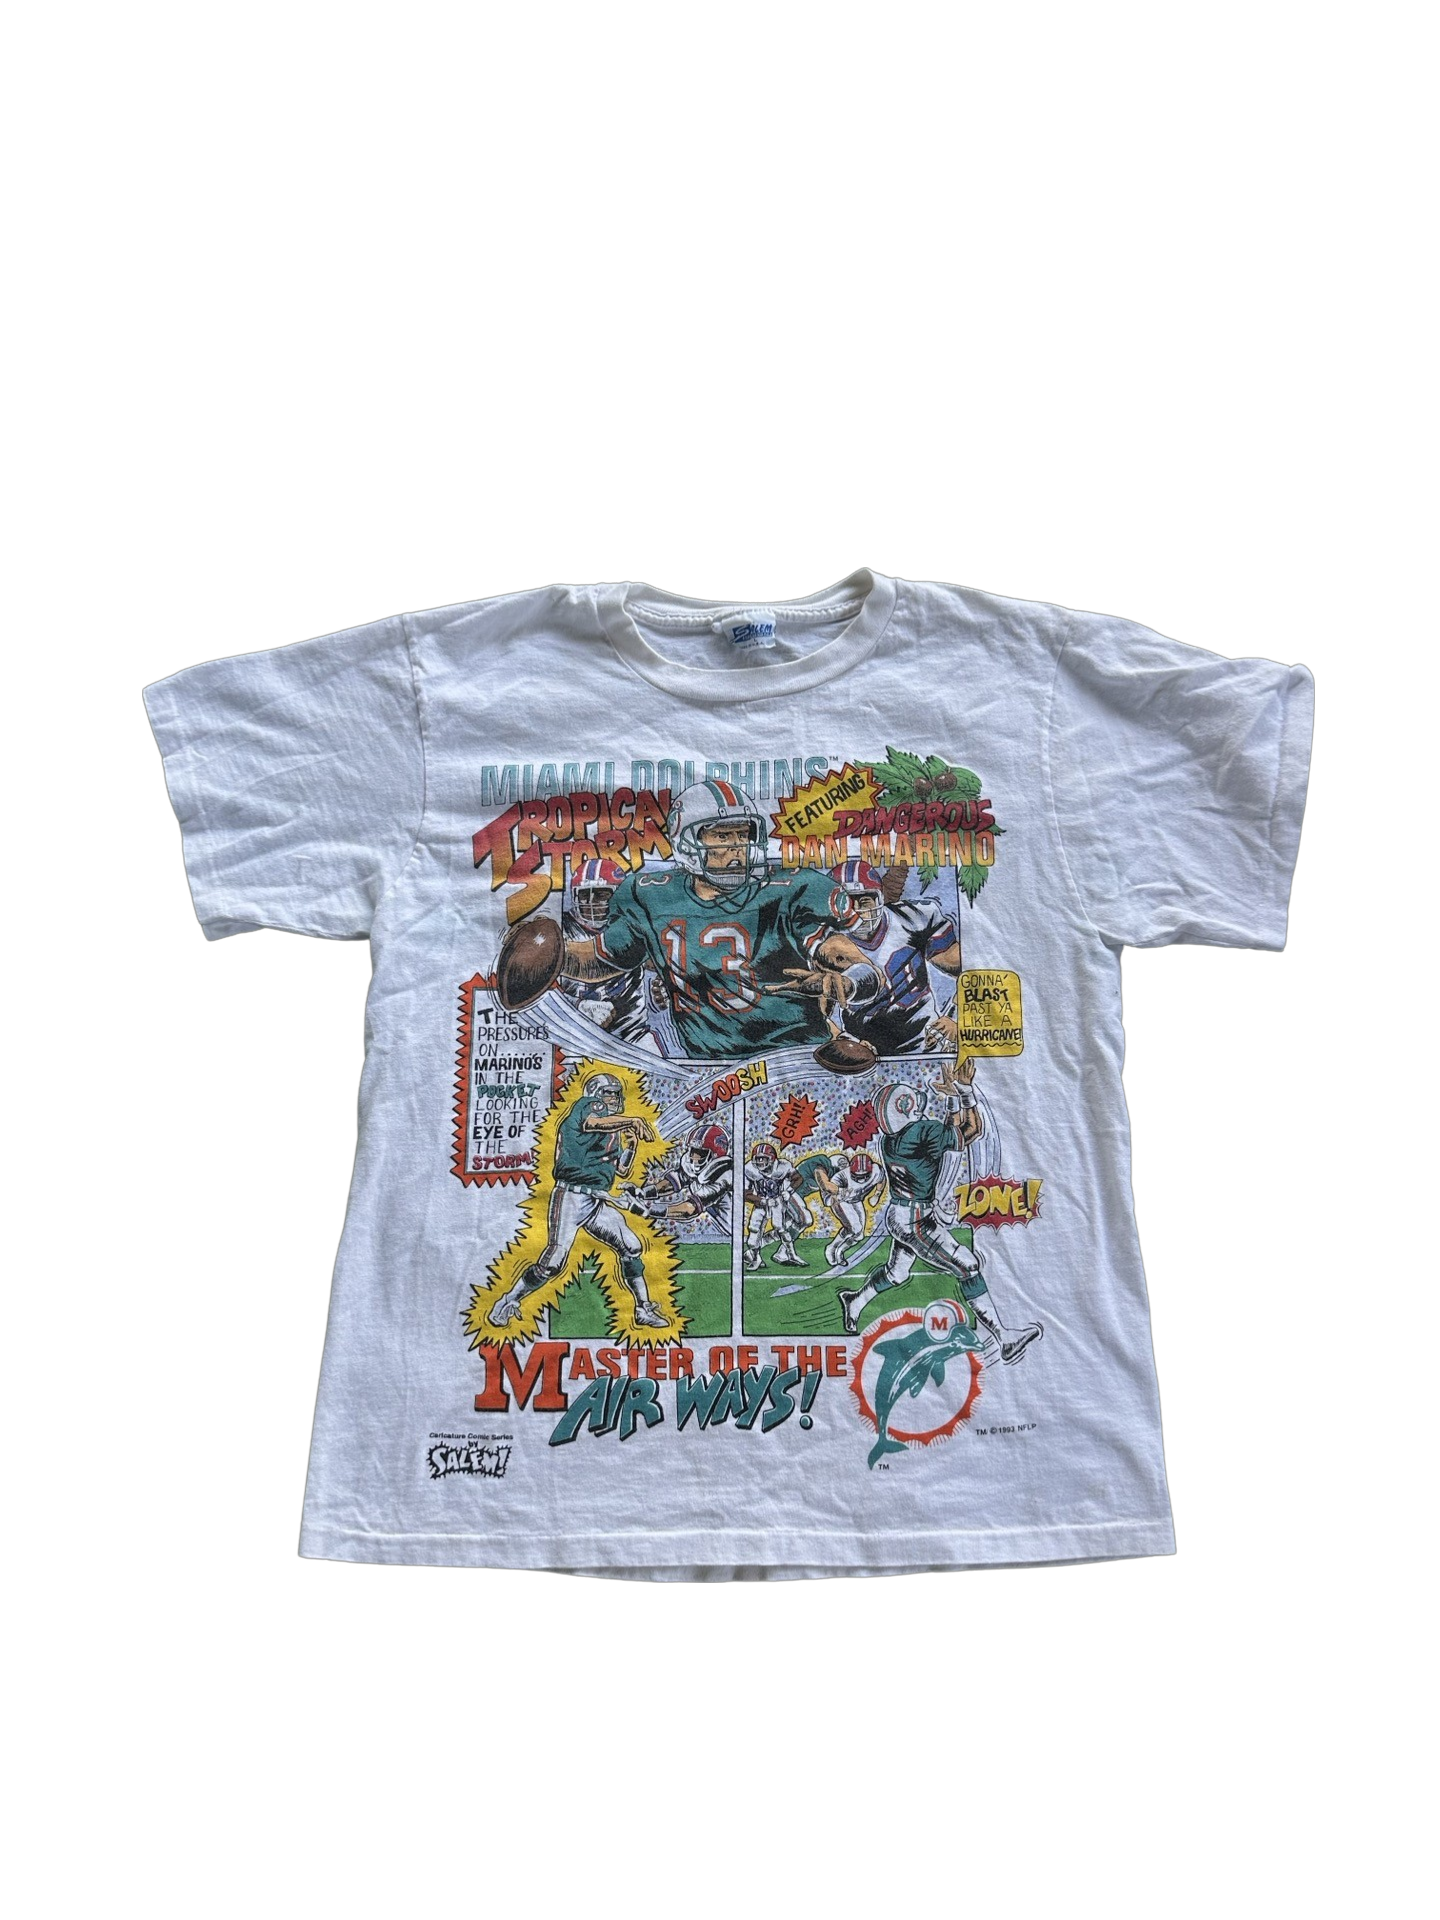 Vintage 1993 Miami Dolphins T-shirt